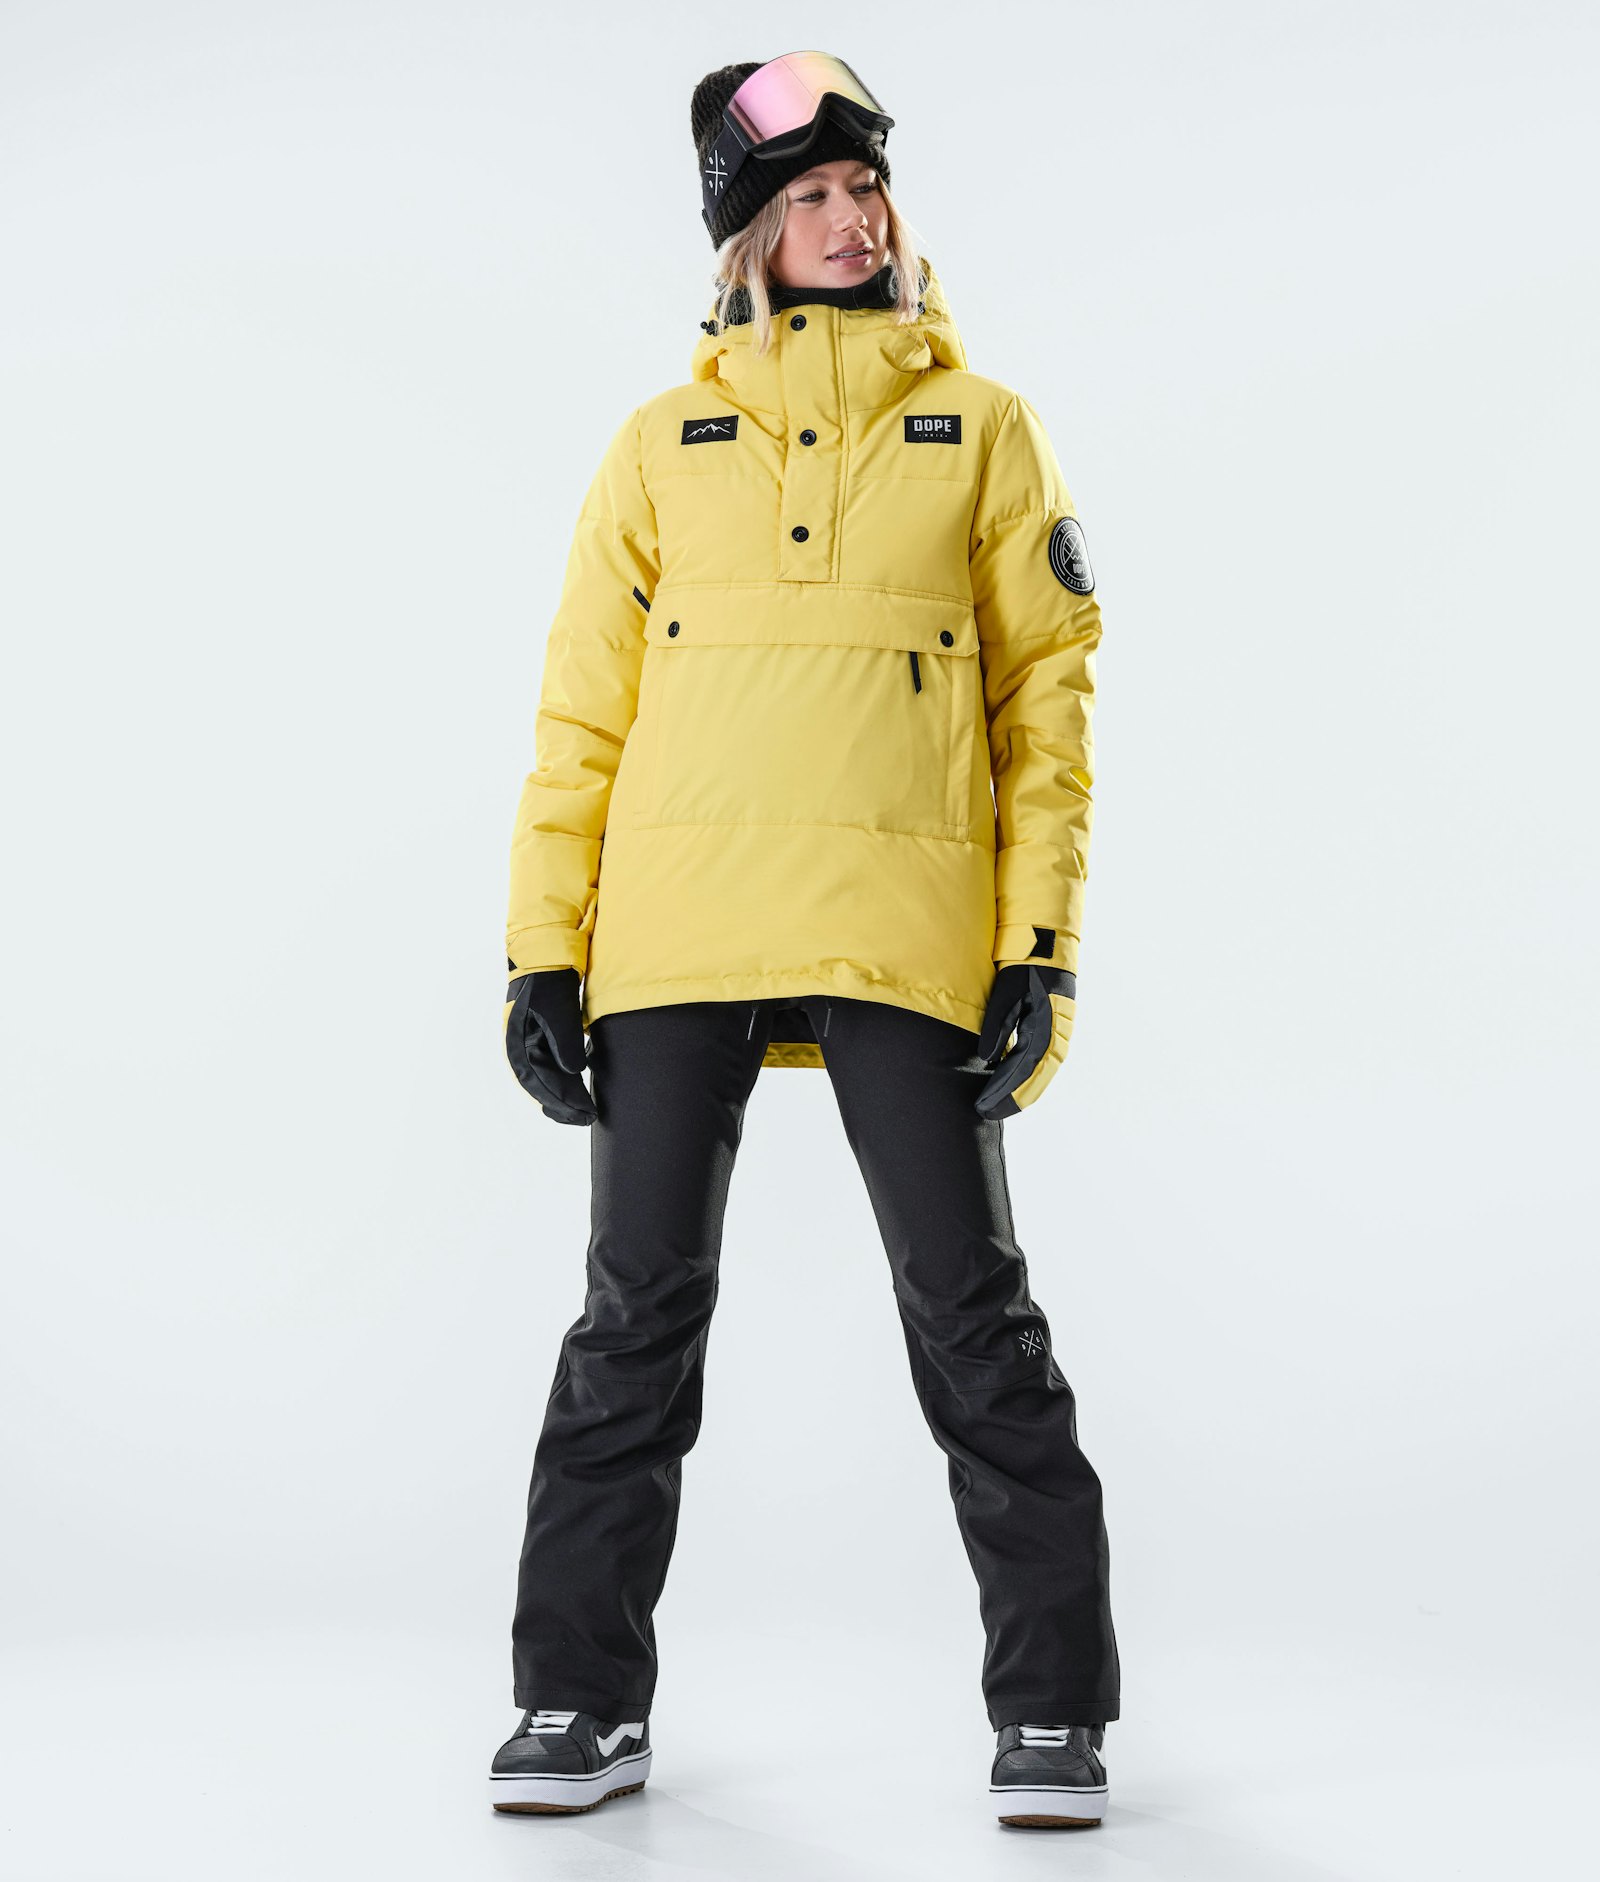 Dope Puffer W 2020 Snowboard Jacket Women Faded Yellow